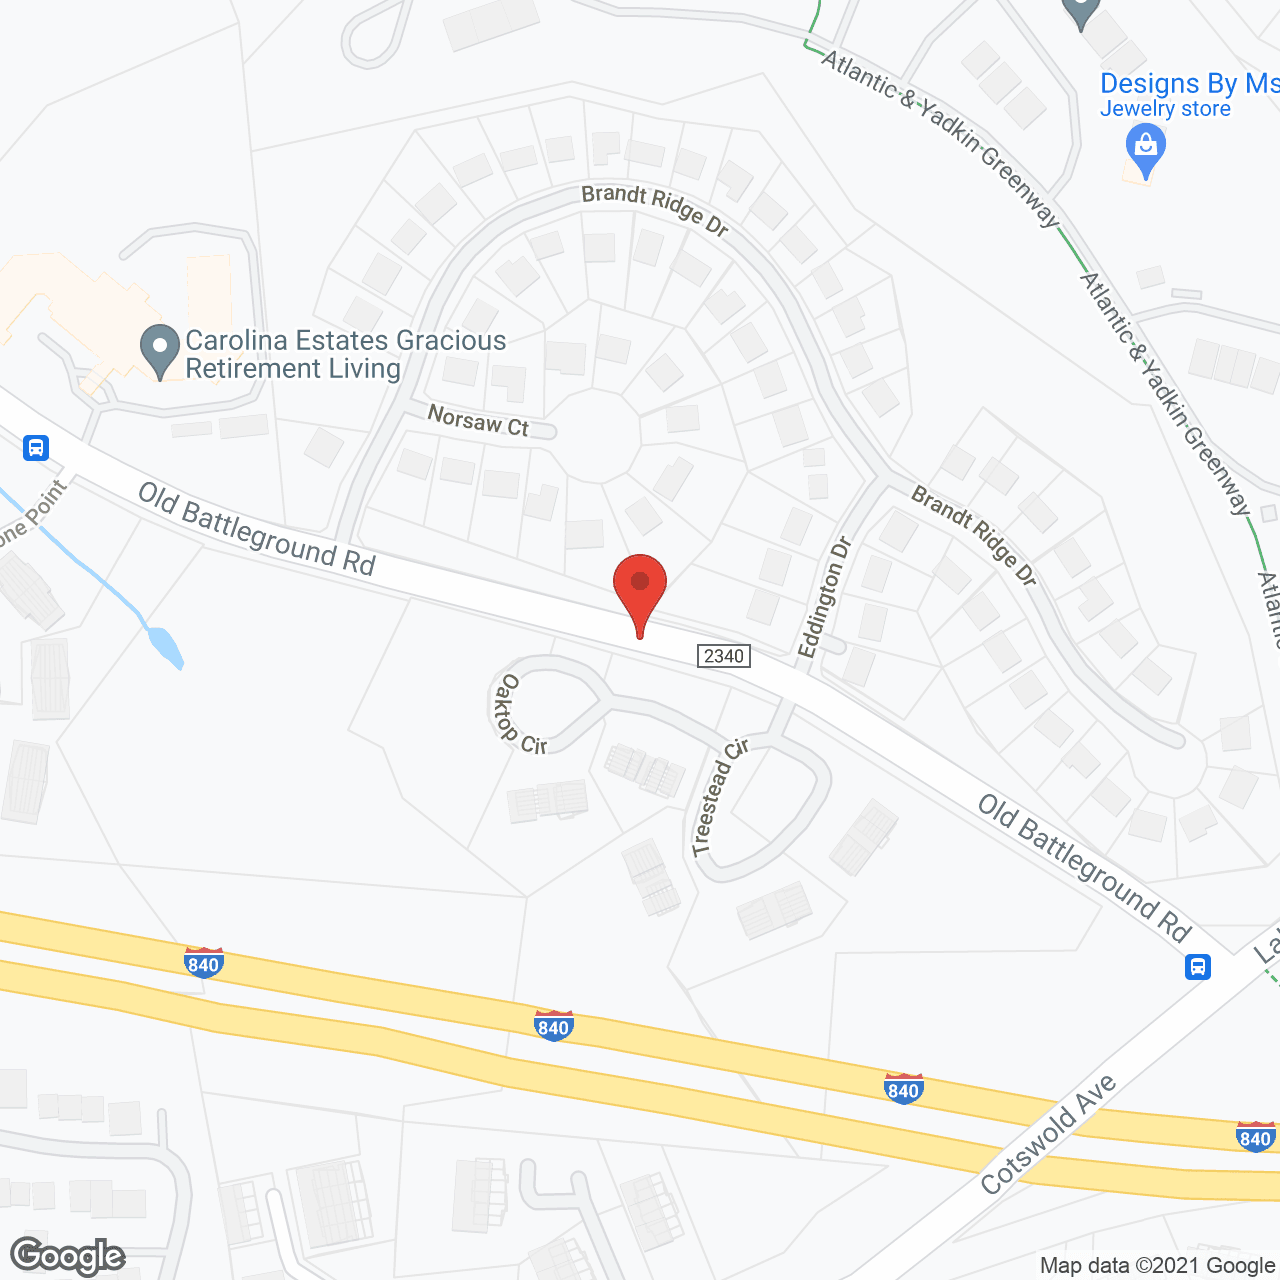 Carolina Estates in google map